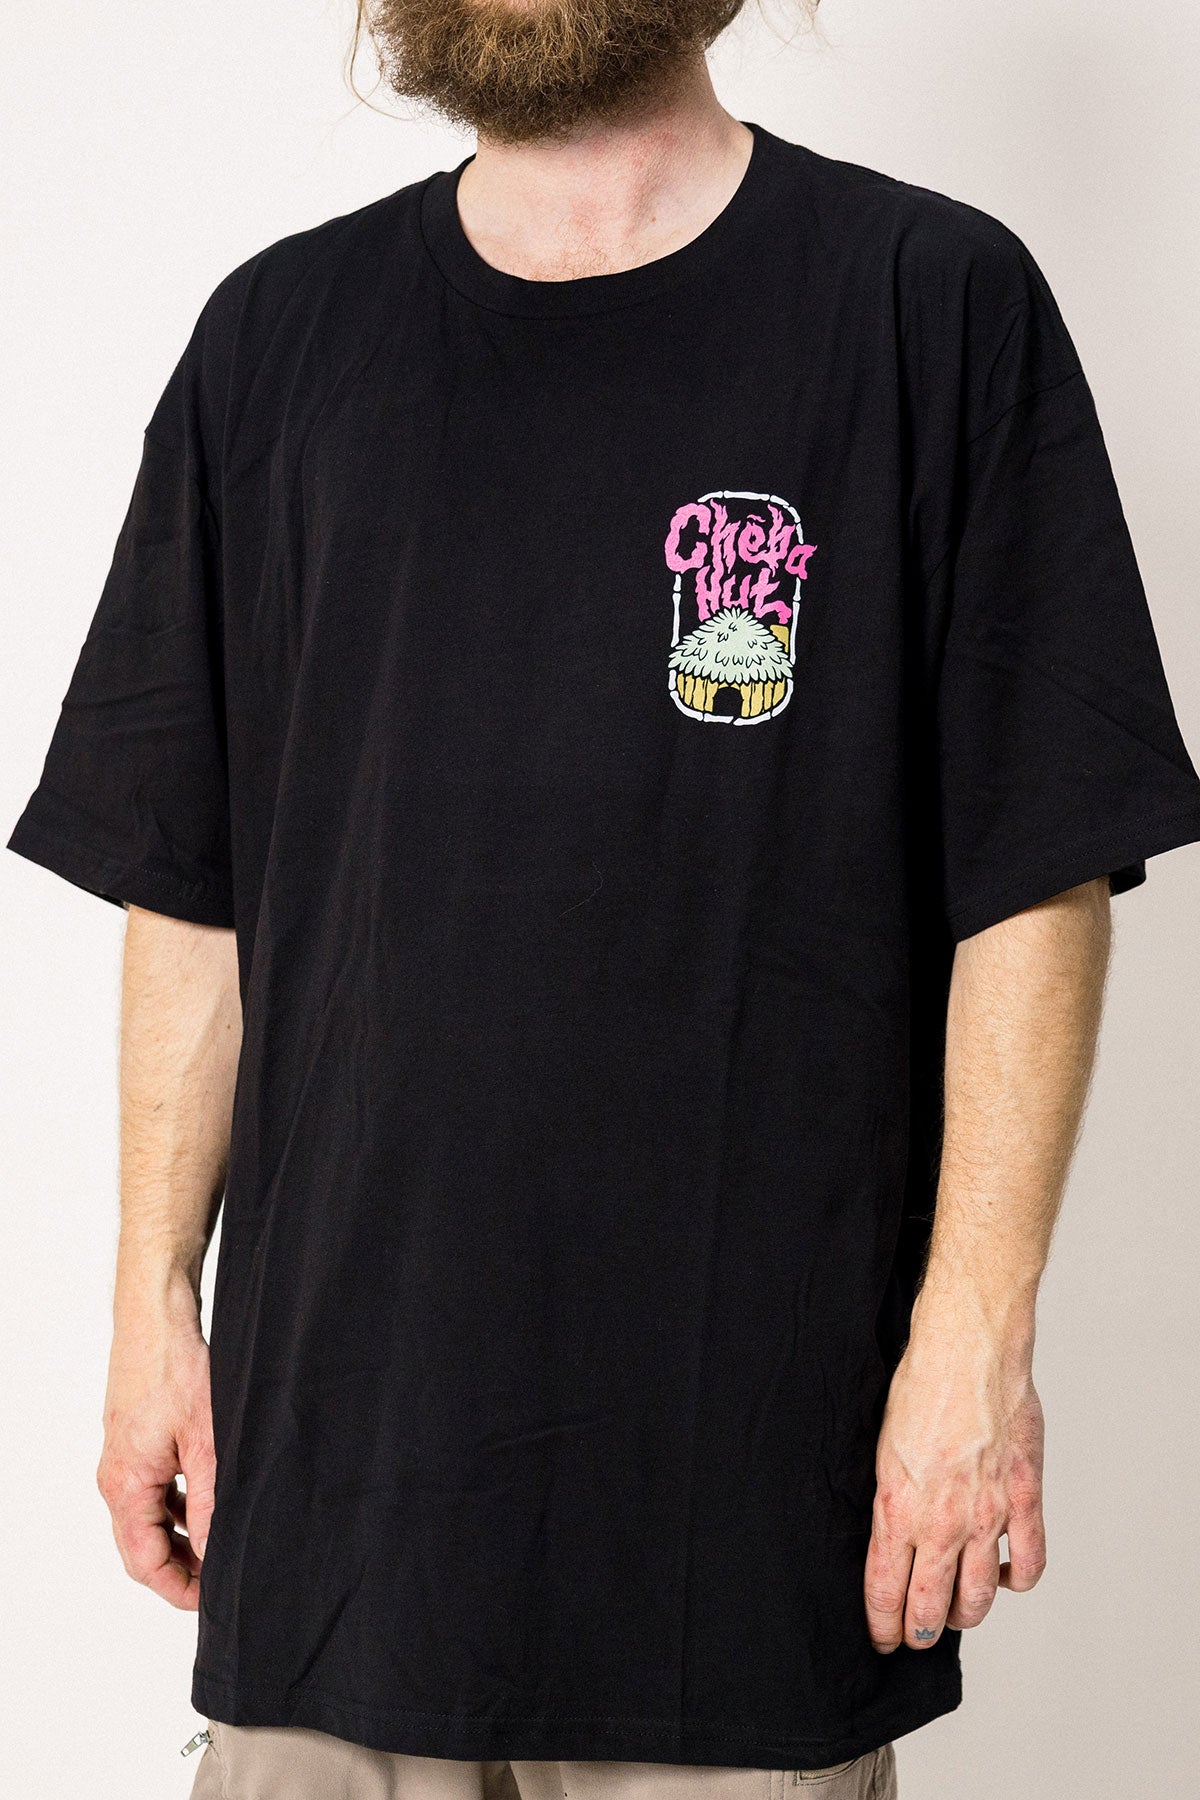 Cheba Wizard-Spring 2023 T-Shirt Black